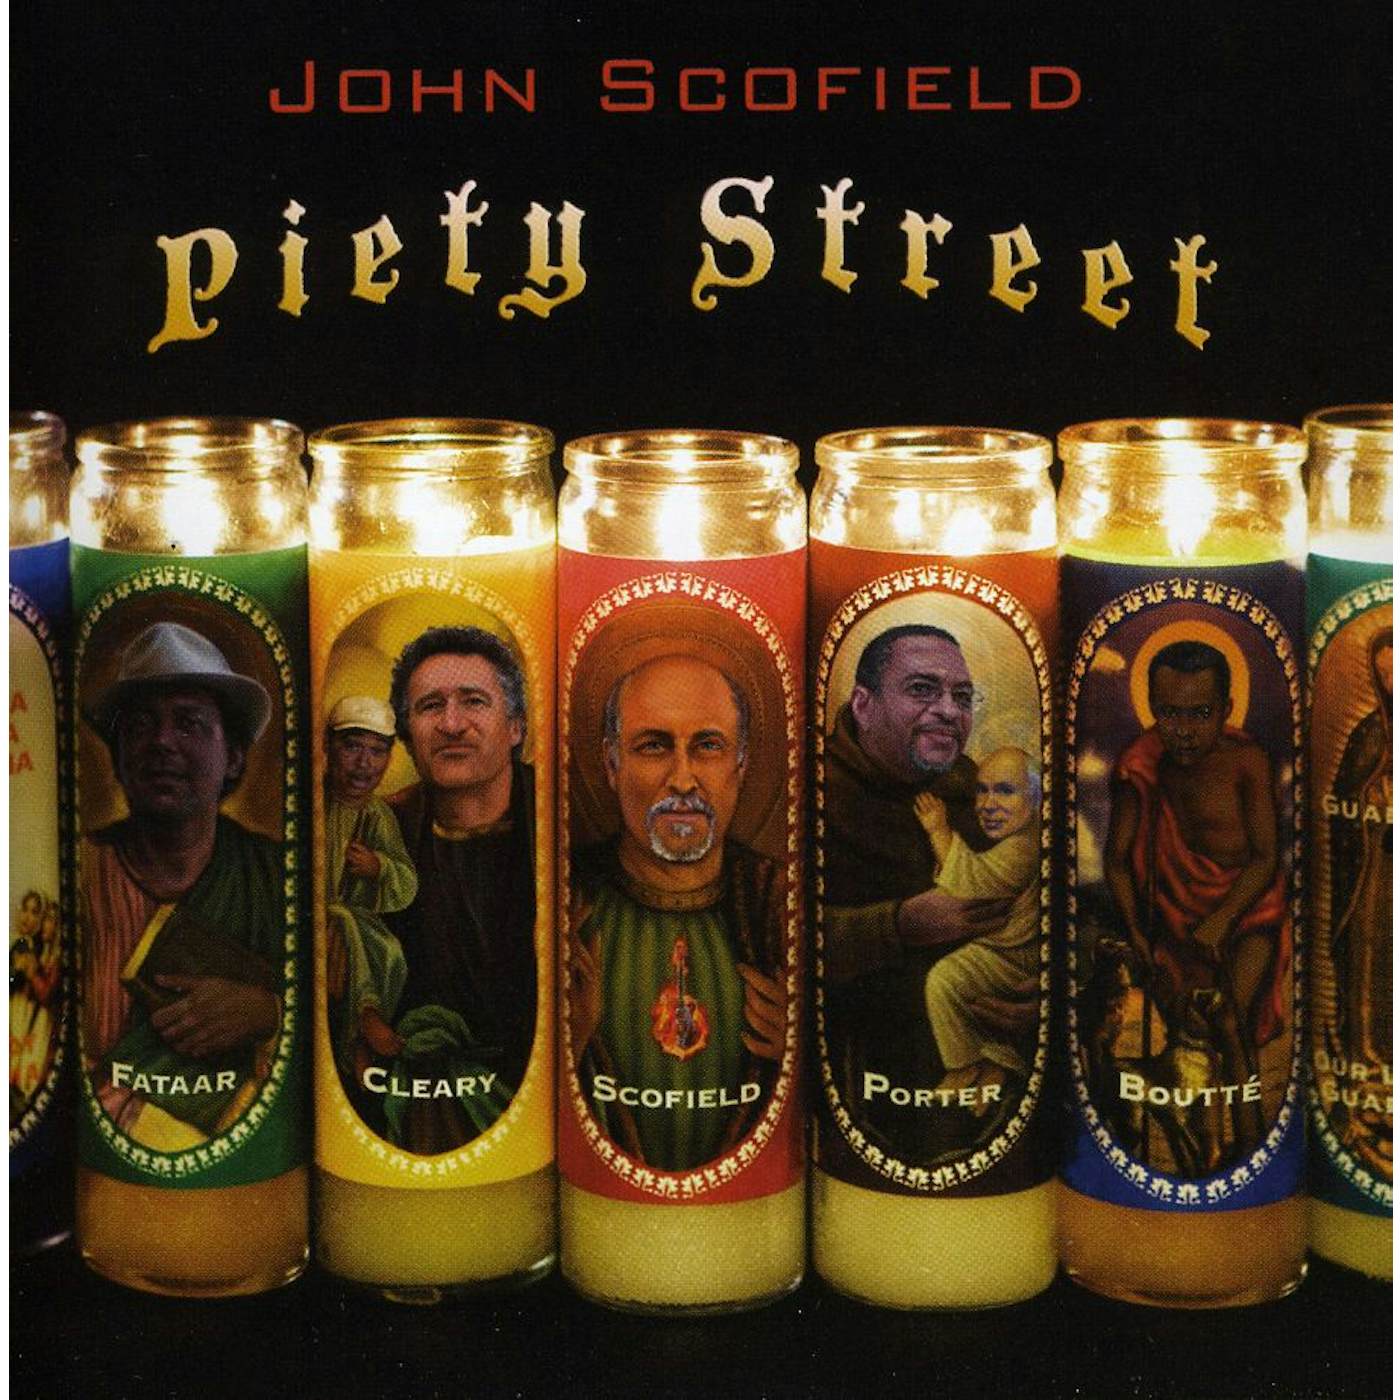 John Scofield PIETY STREET CD